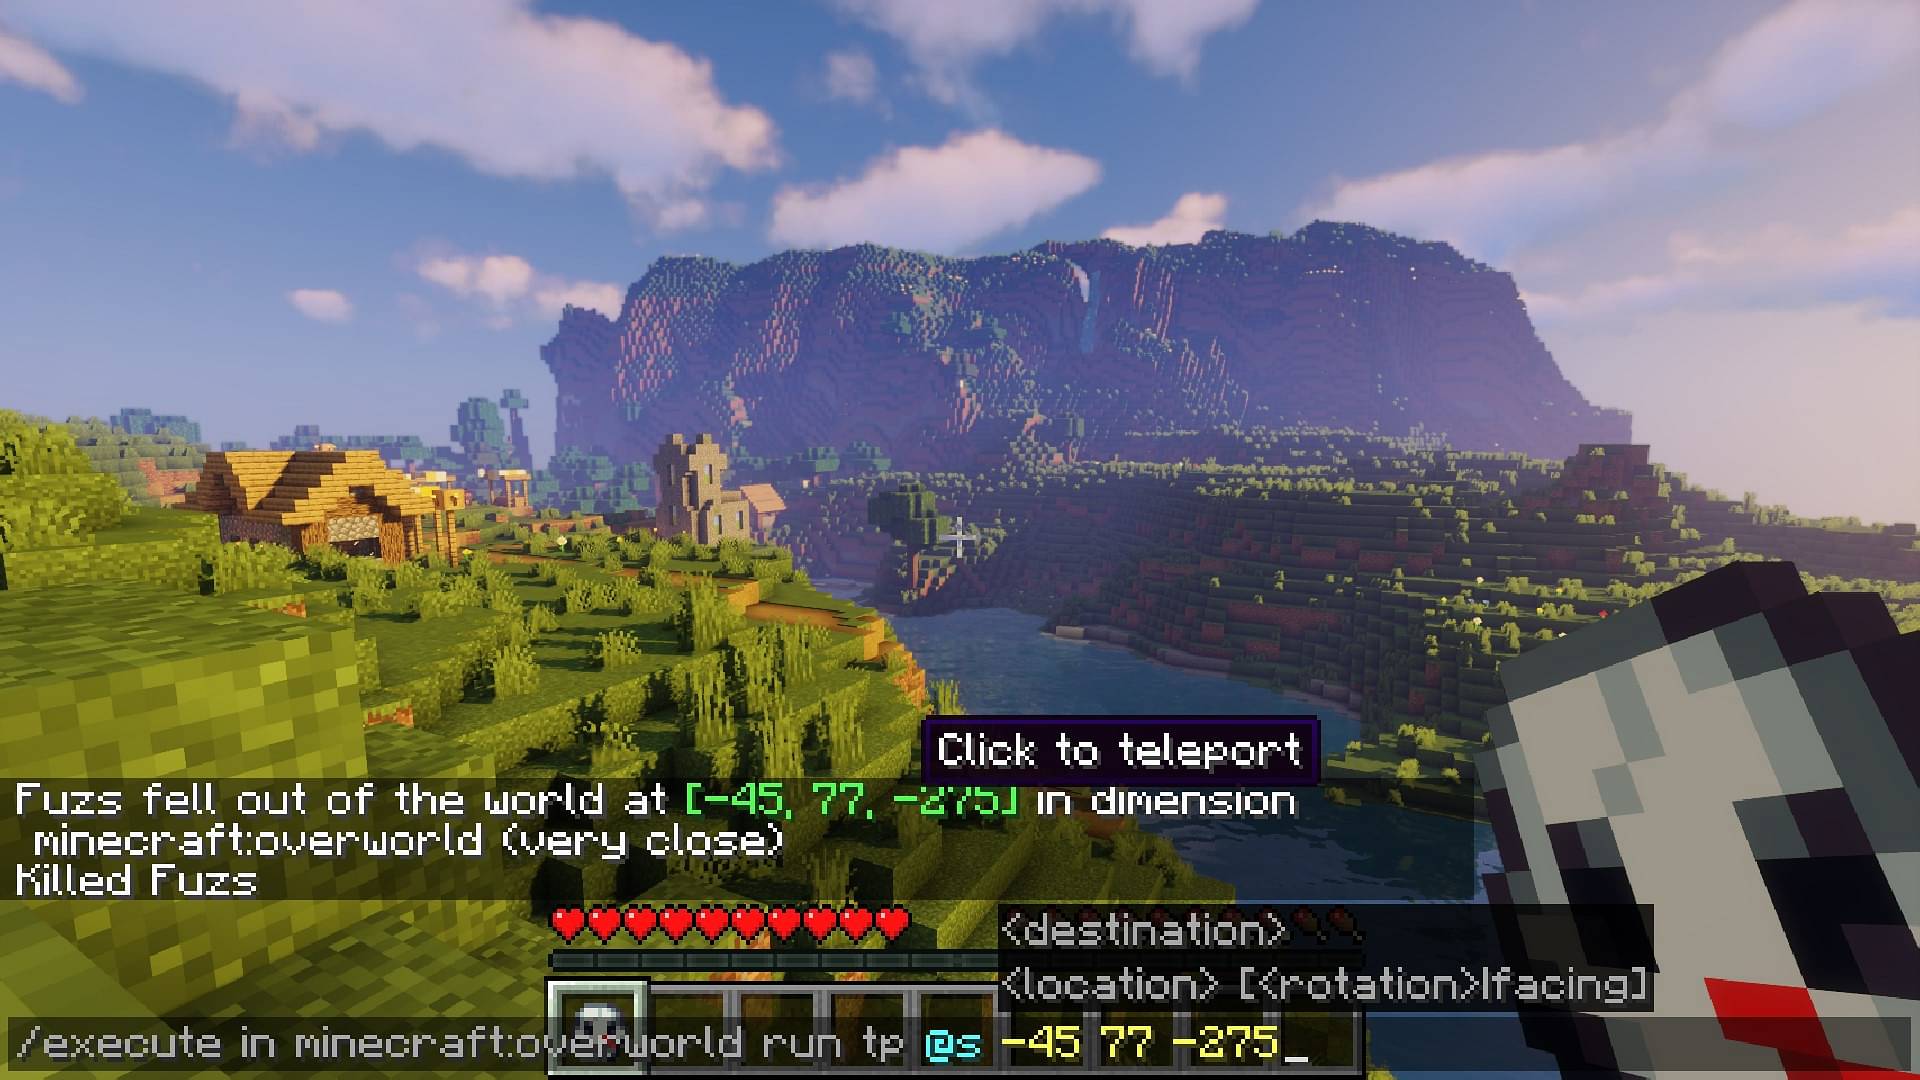 A quiet place - Minecraft Mods - CurseForge